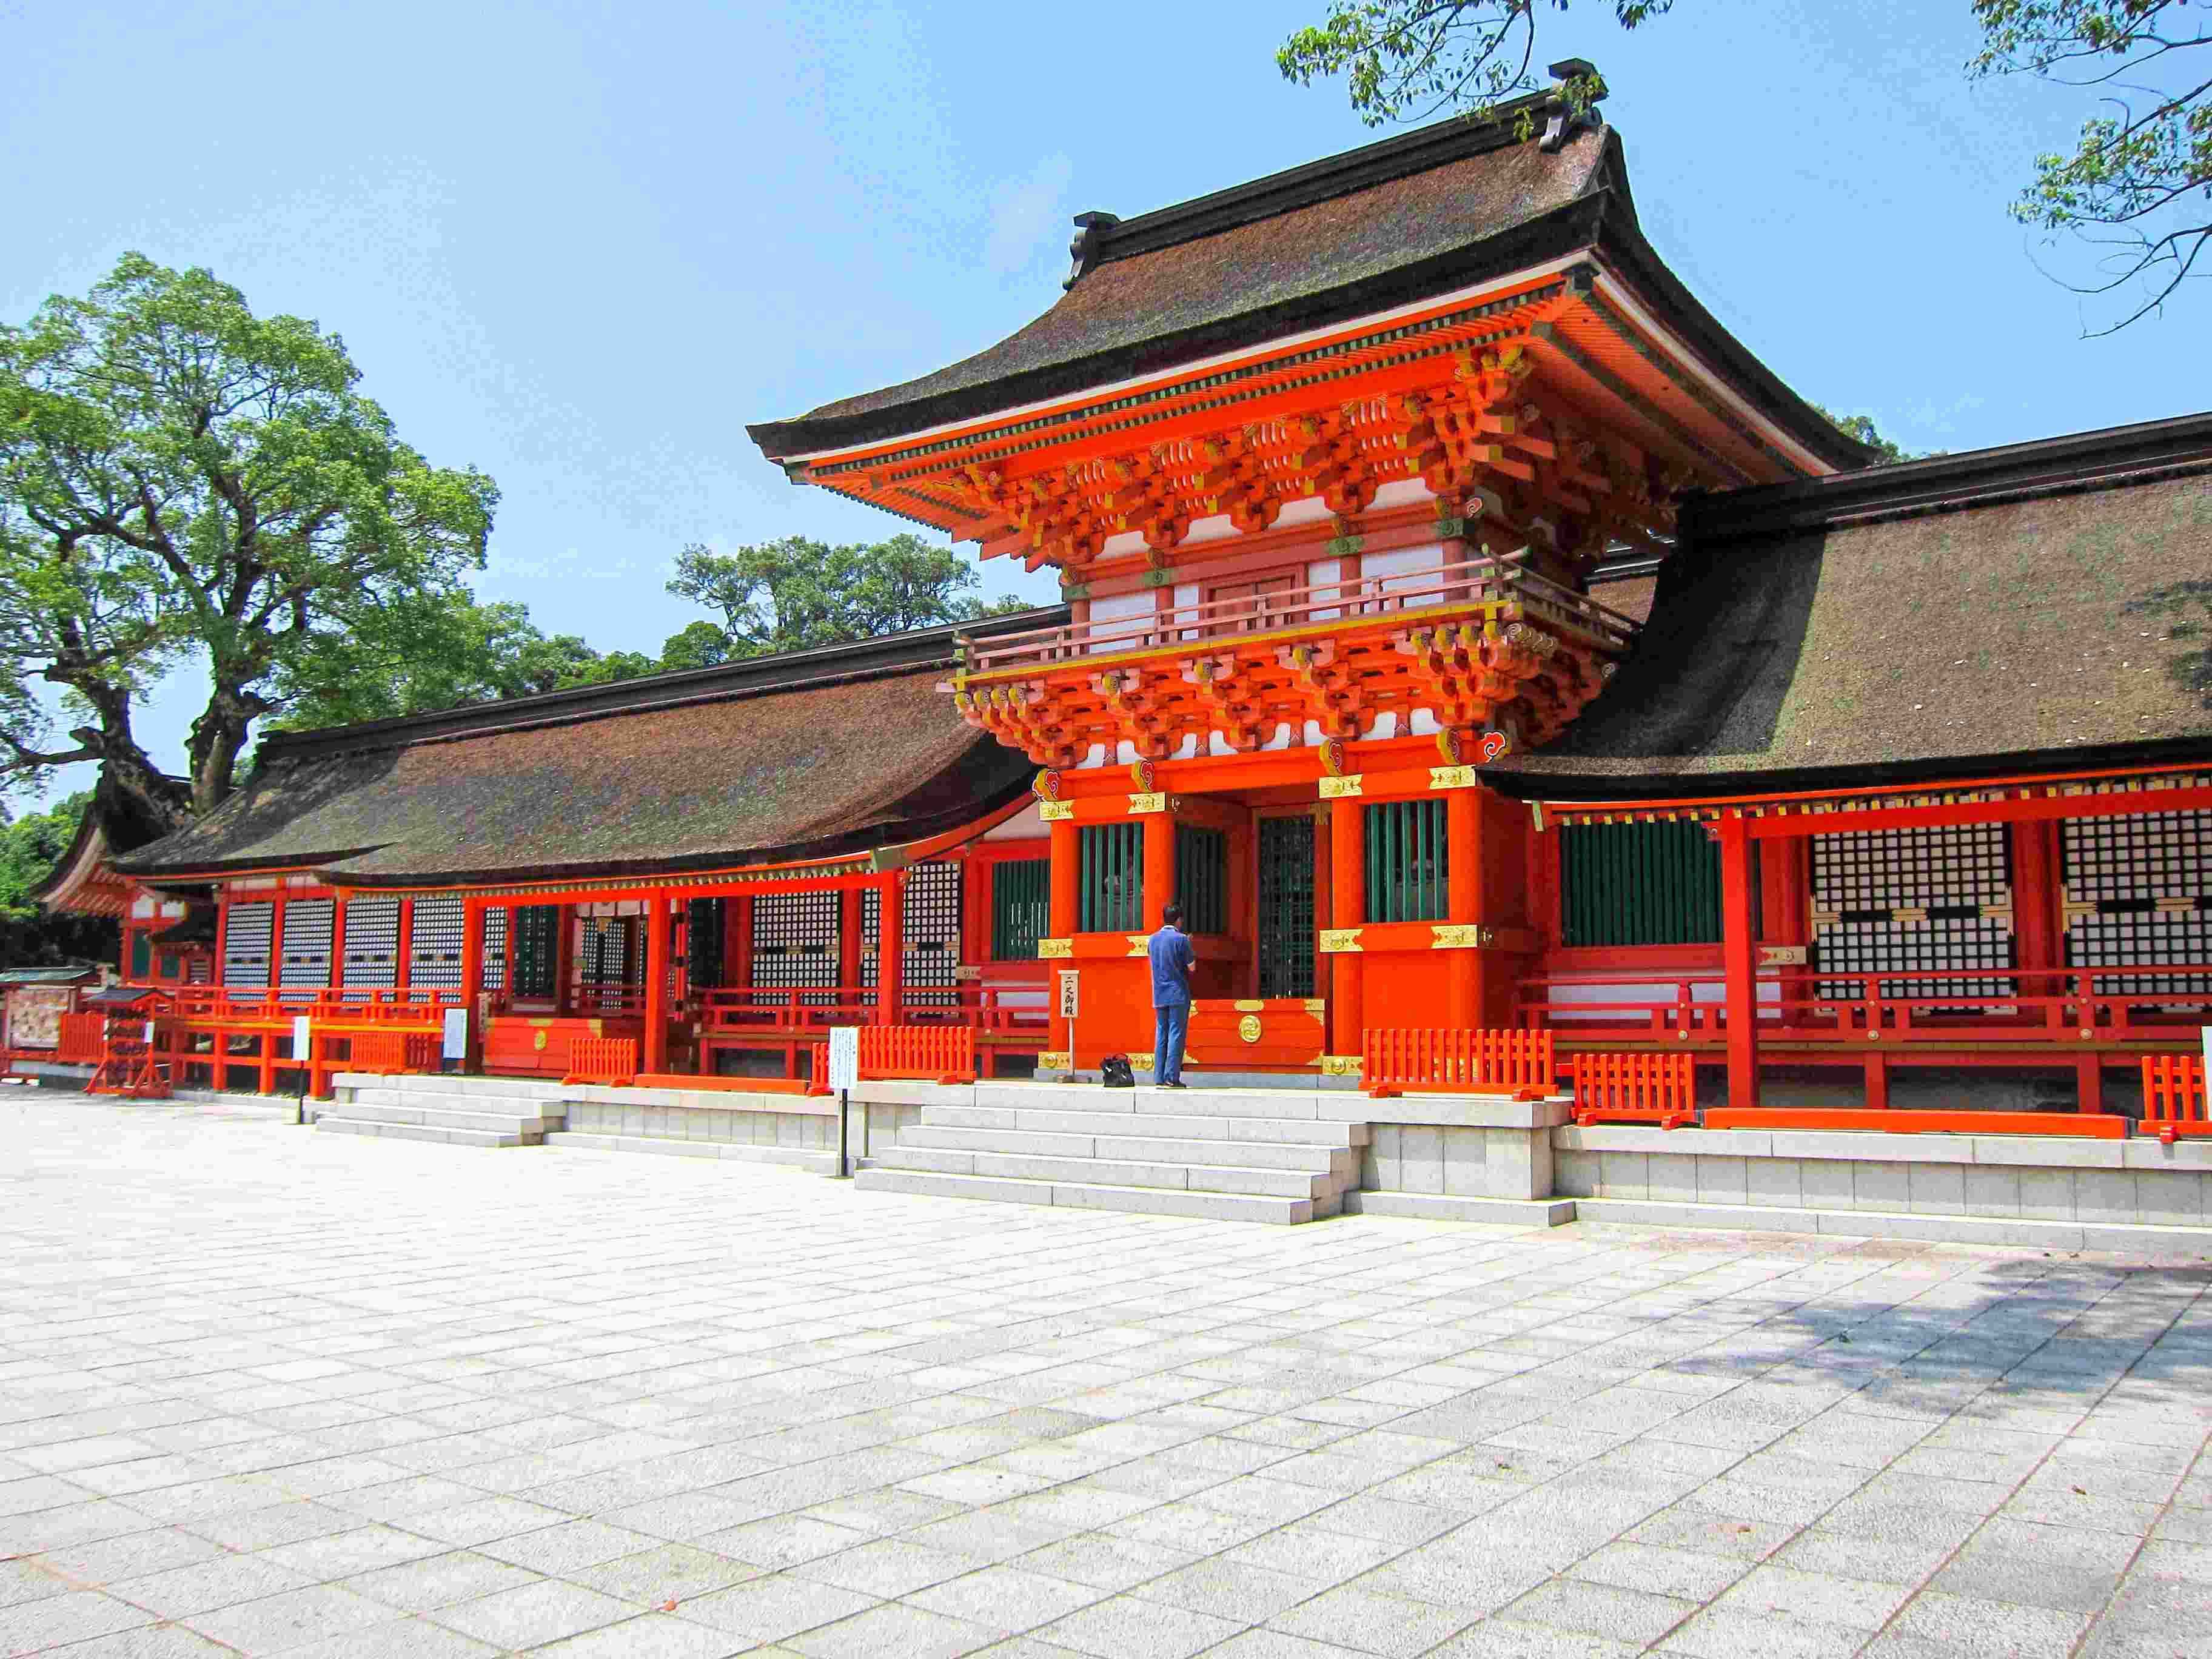 The main complex of Usa Jingū